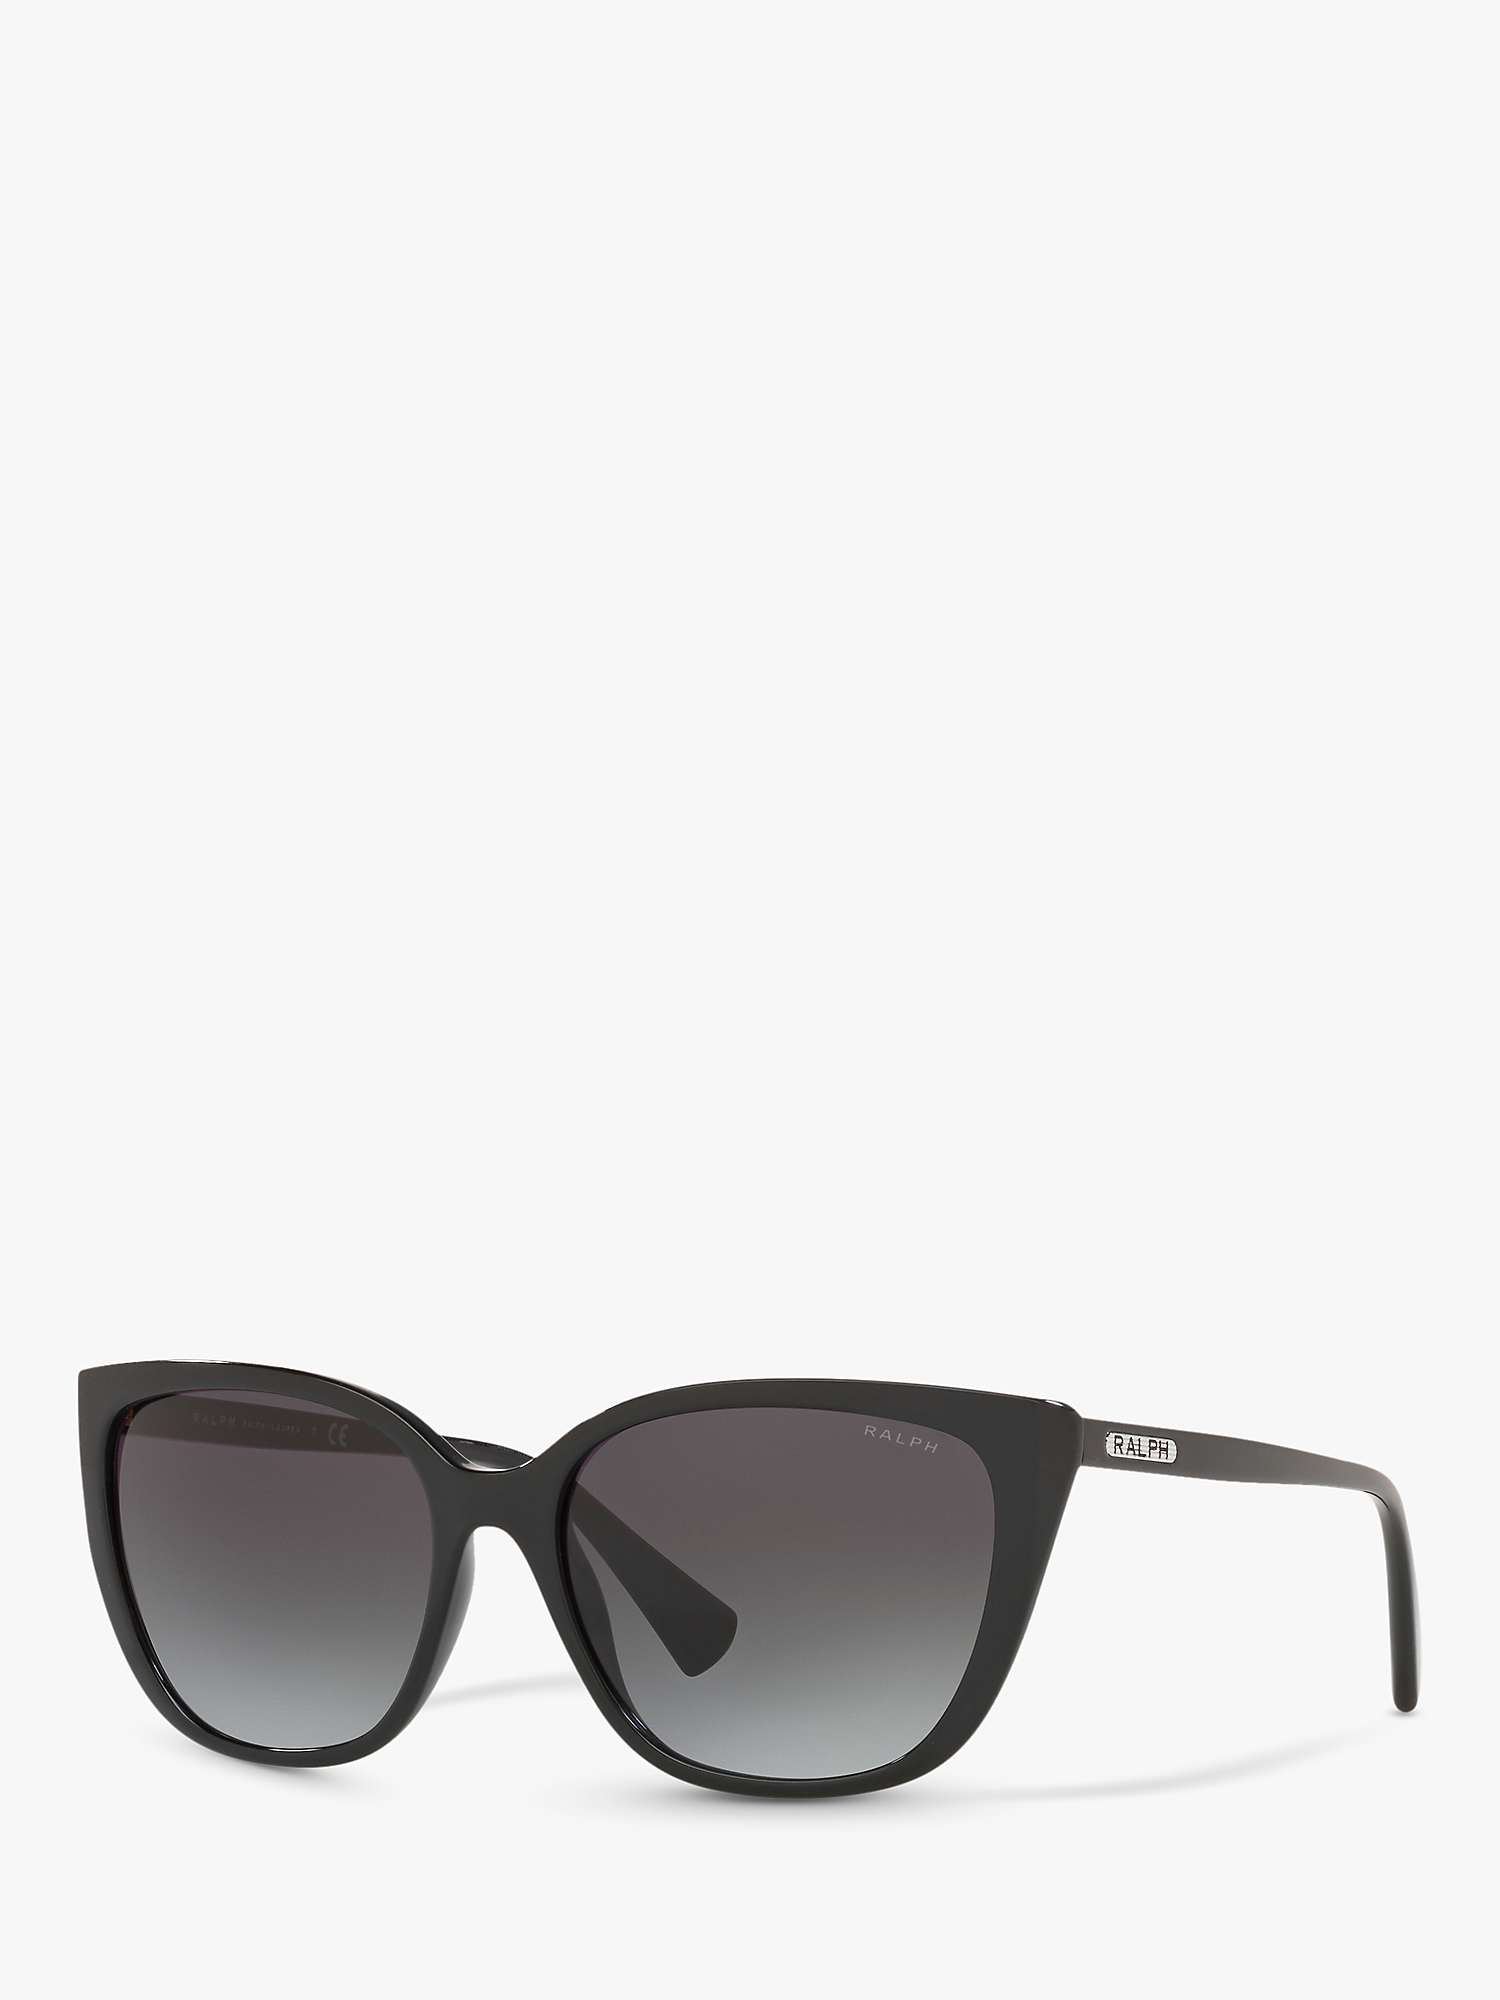 Buy Ralph RA5274 Women's Butterfly Shape Sunglasses, Black Gloss Online at johnlewis.com